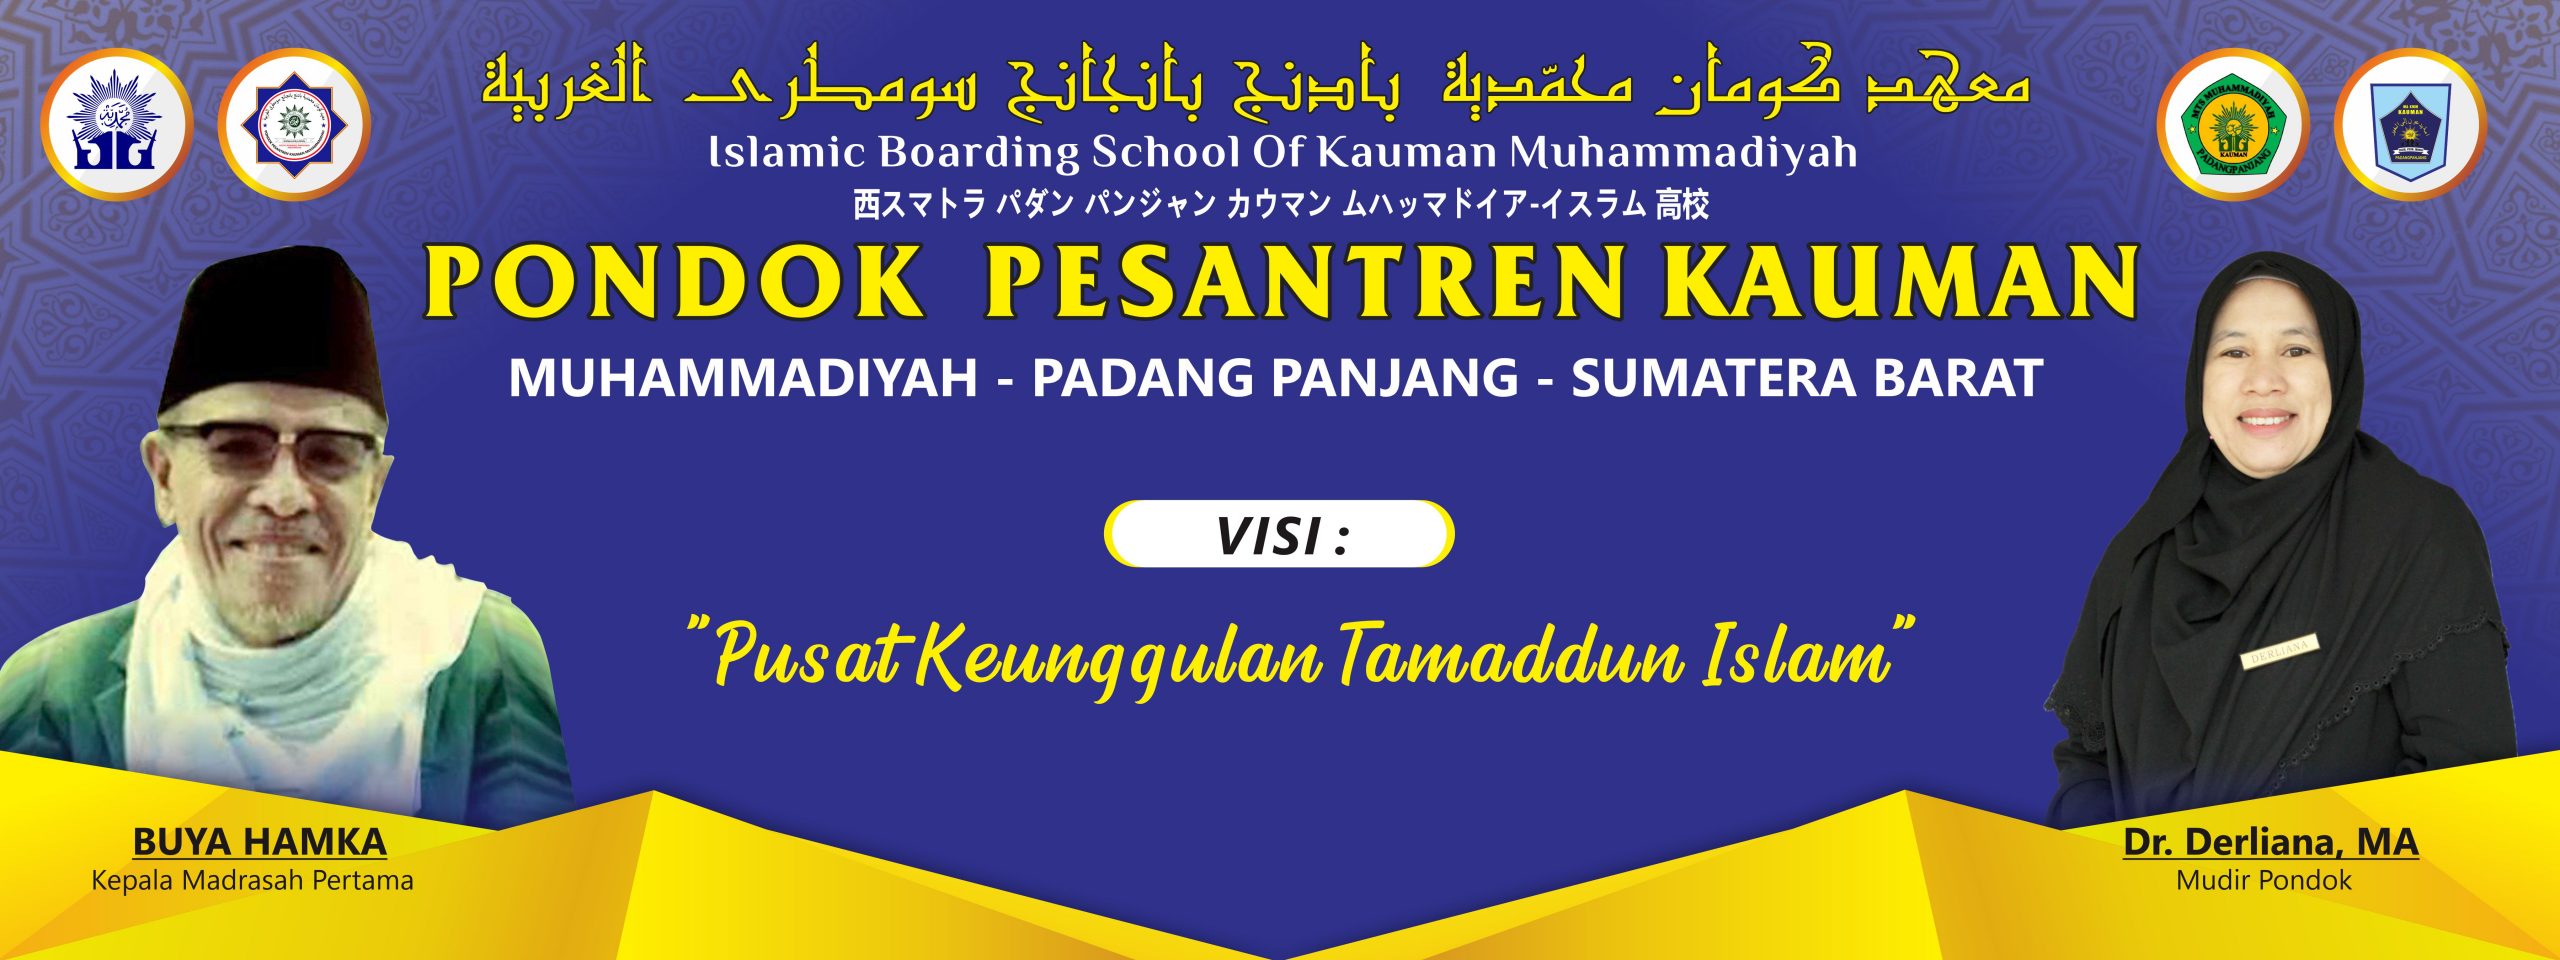 Profil Pondok Pesantren Kauman Muhammadiyah Padang Panjang